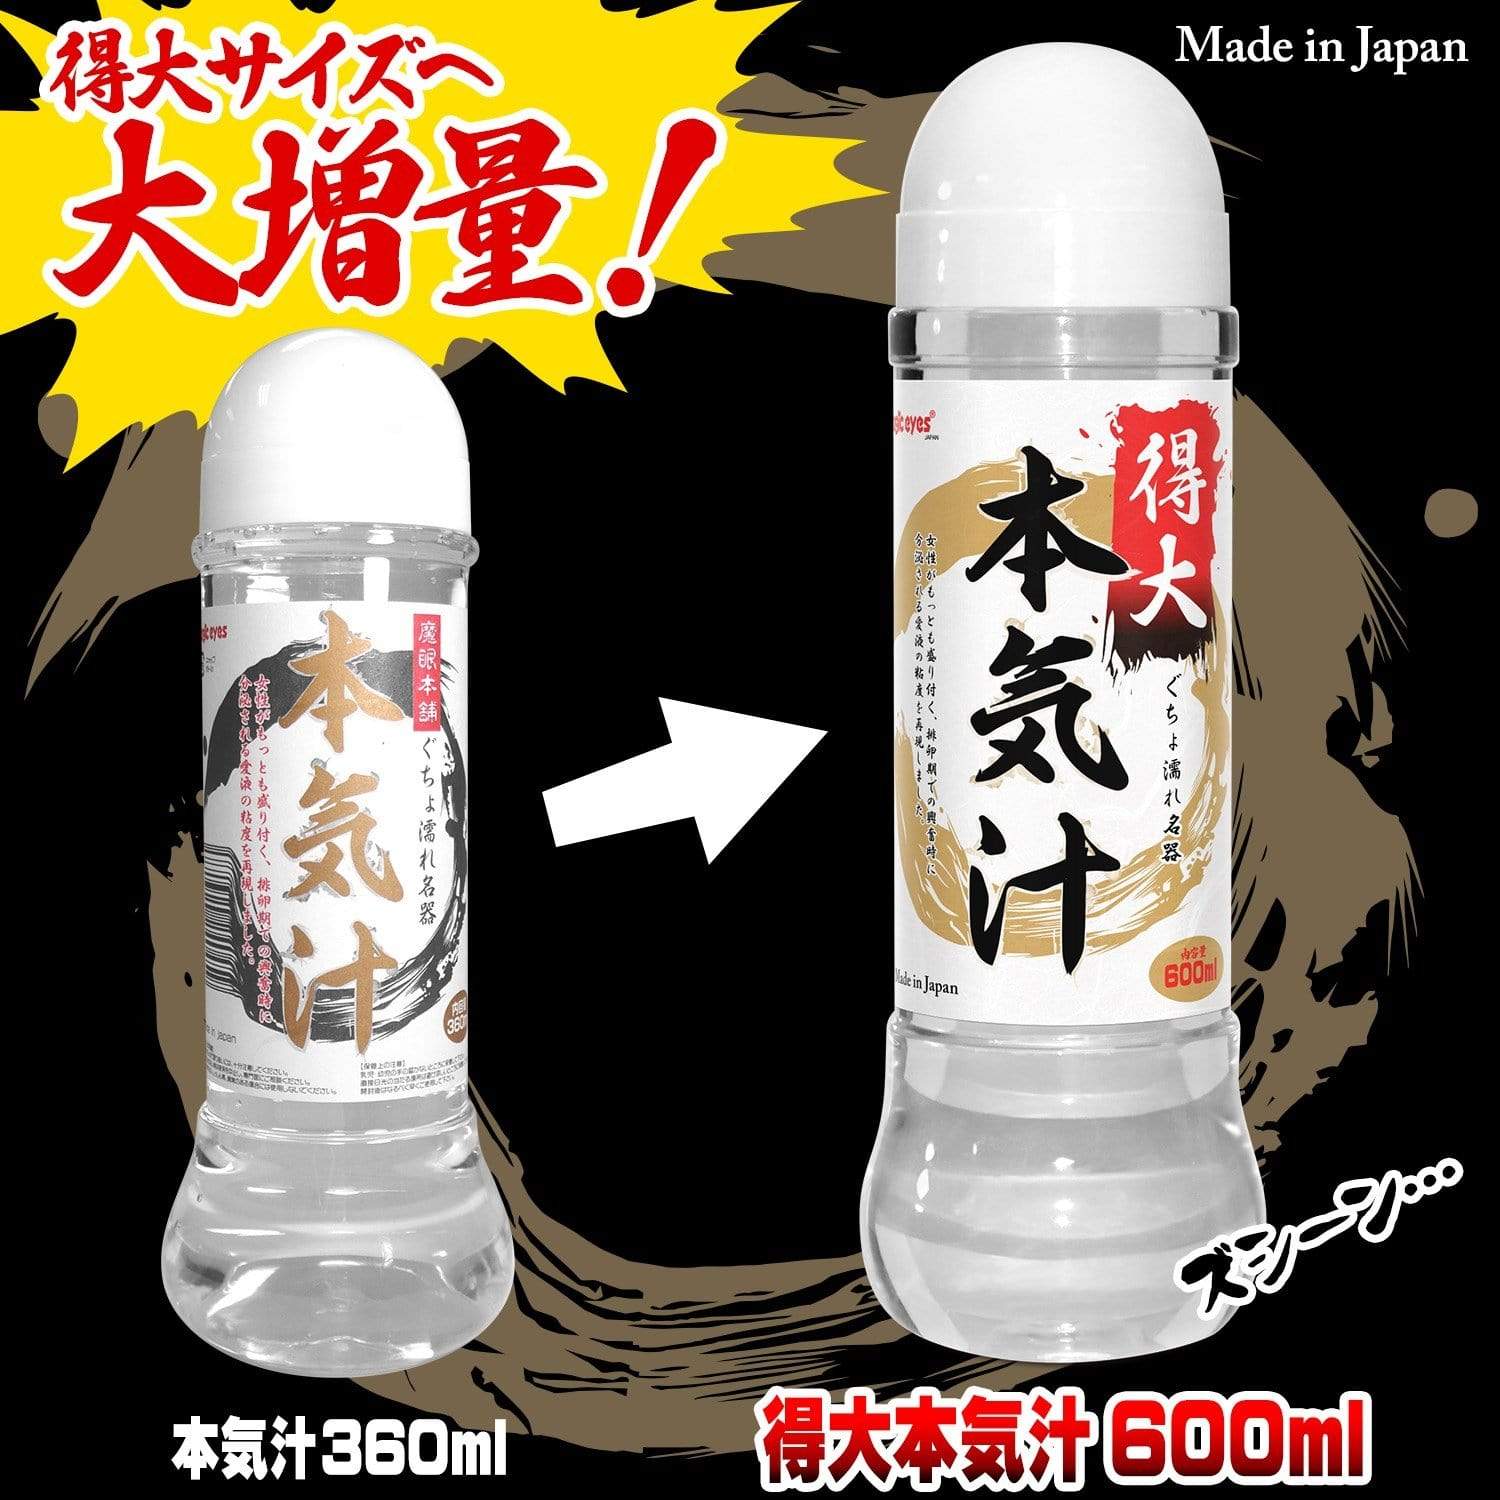 Magic Eyes - Japan Meiki Lotion Lube 600ml (Thick) -  Lube (Water Based)  Durio.sg